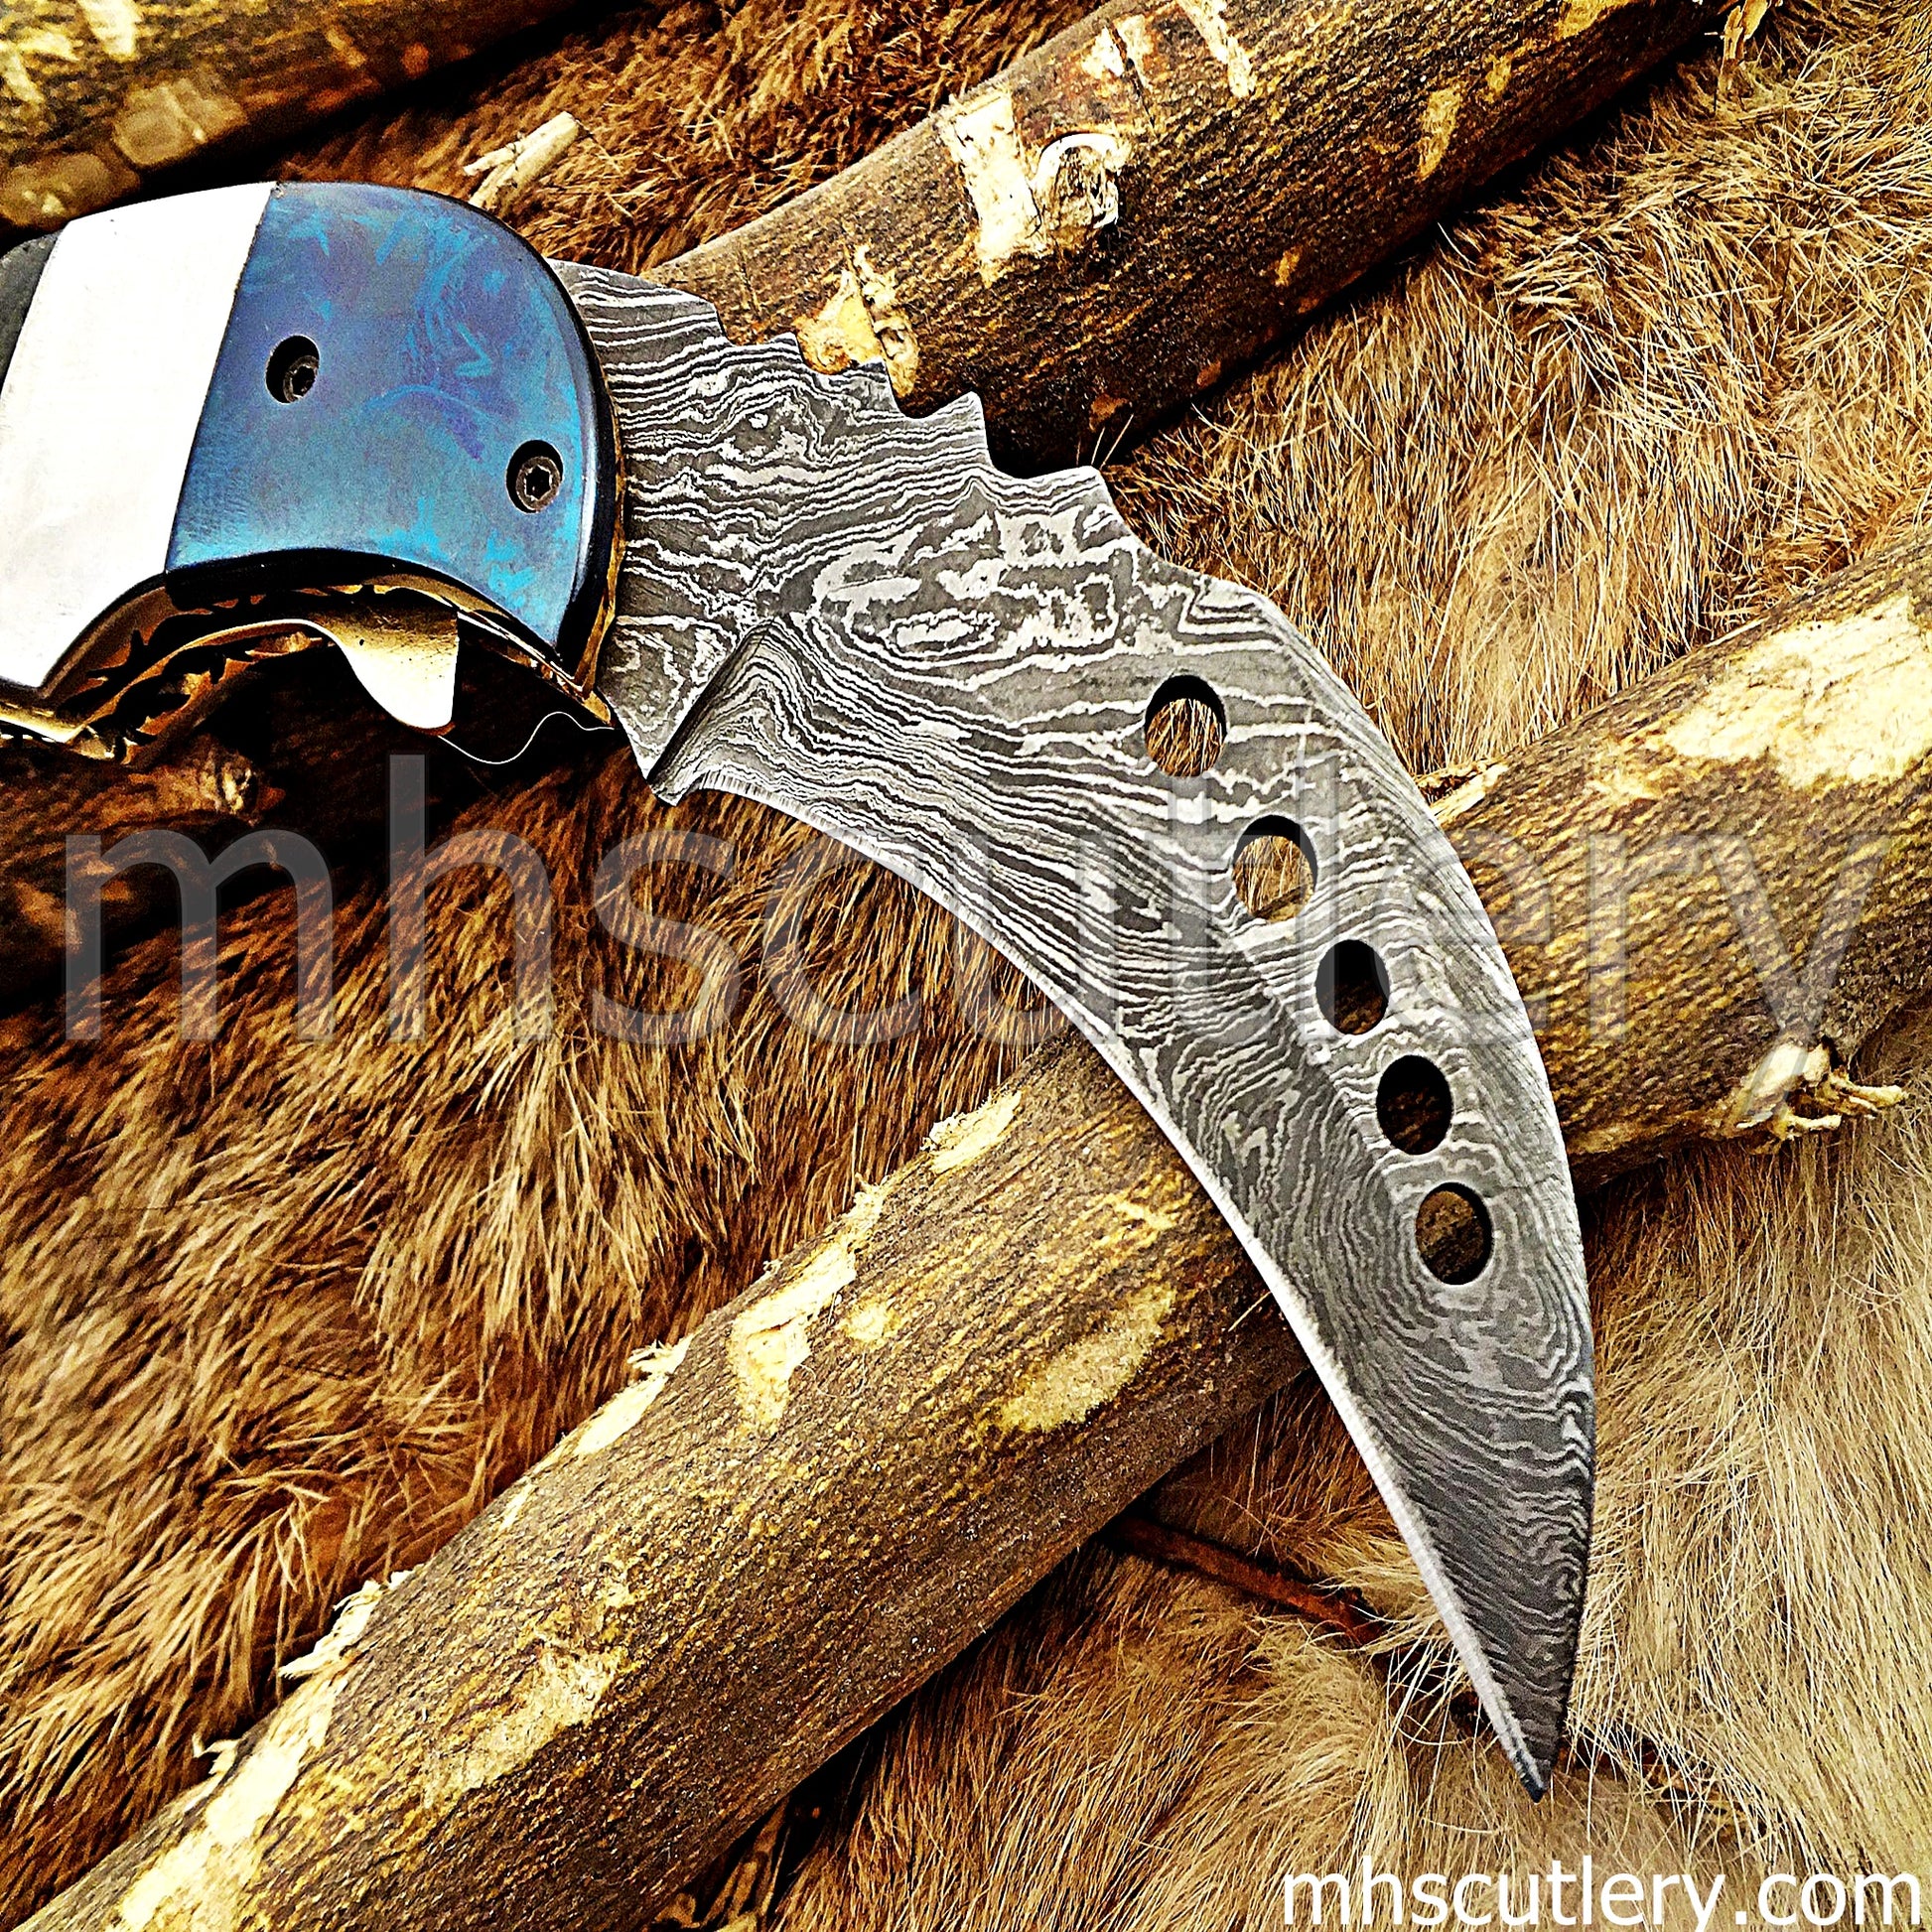 Damascus Steel Folding Karambit Pocket Knife | mhscutlery